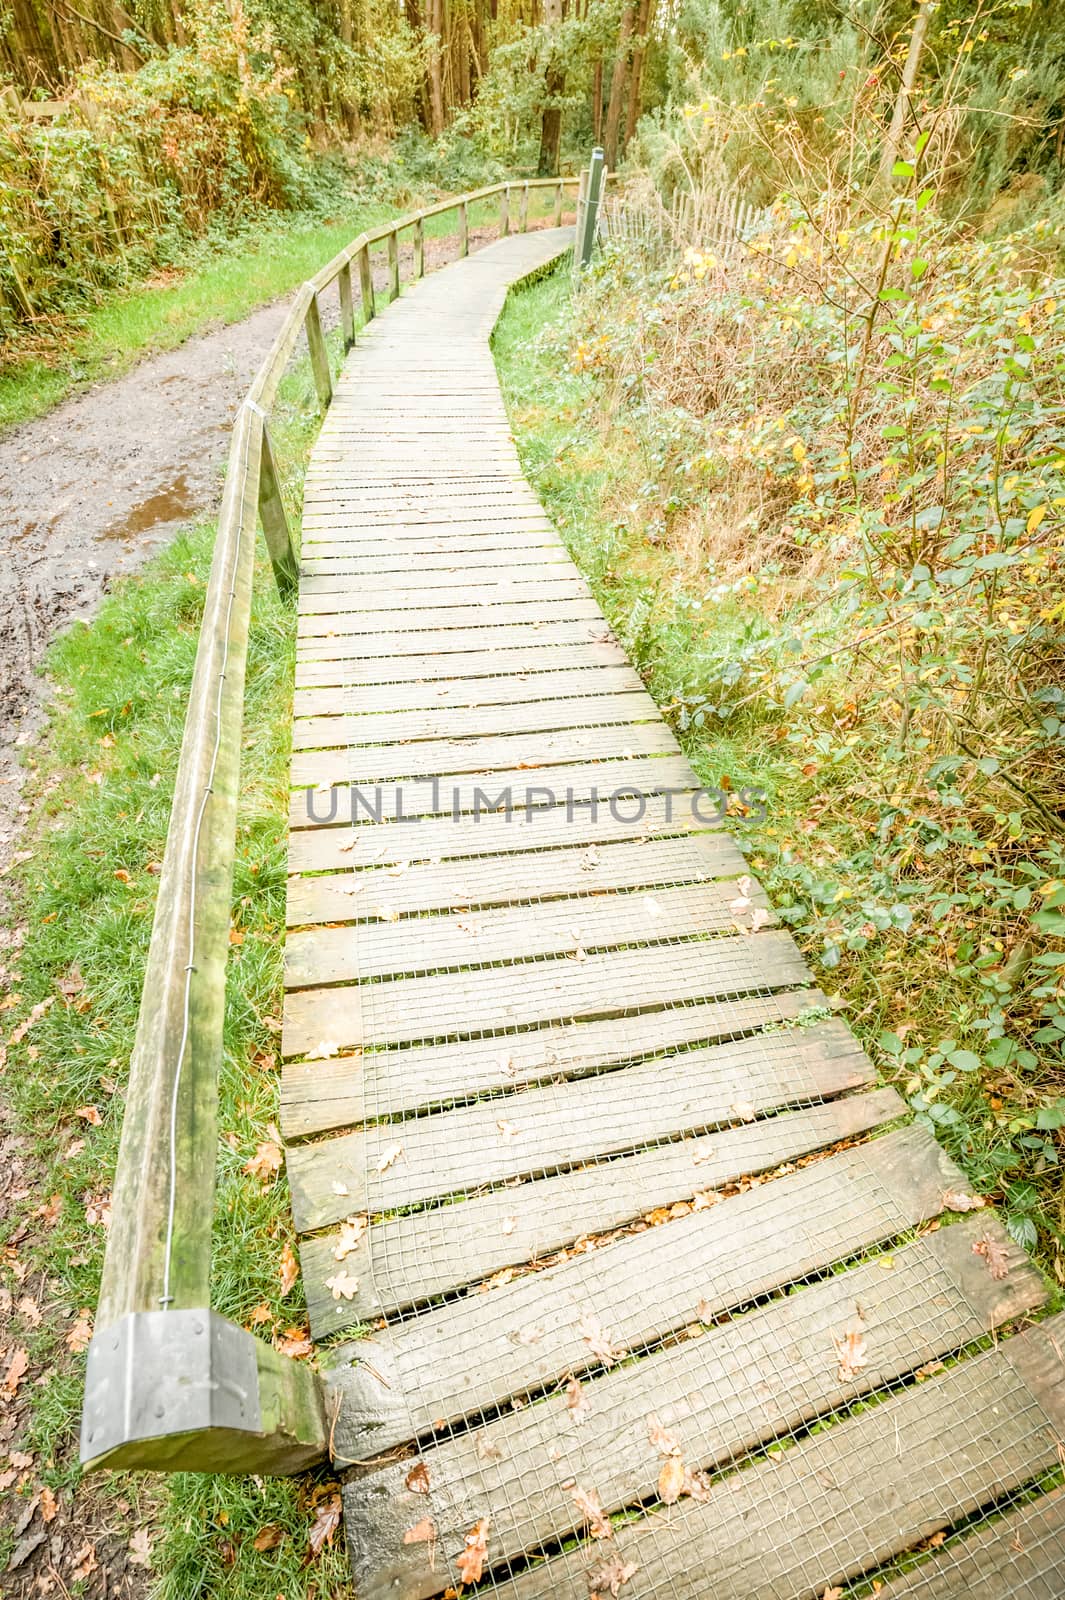 raised wooden boardwalk through a nature trail